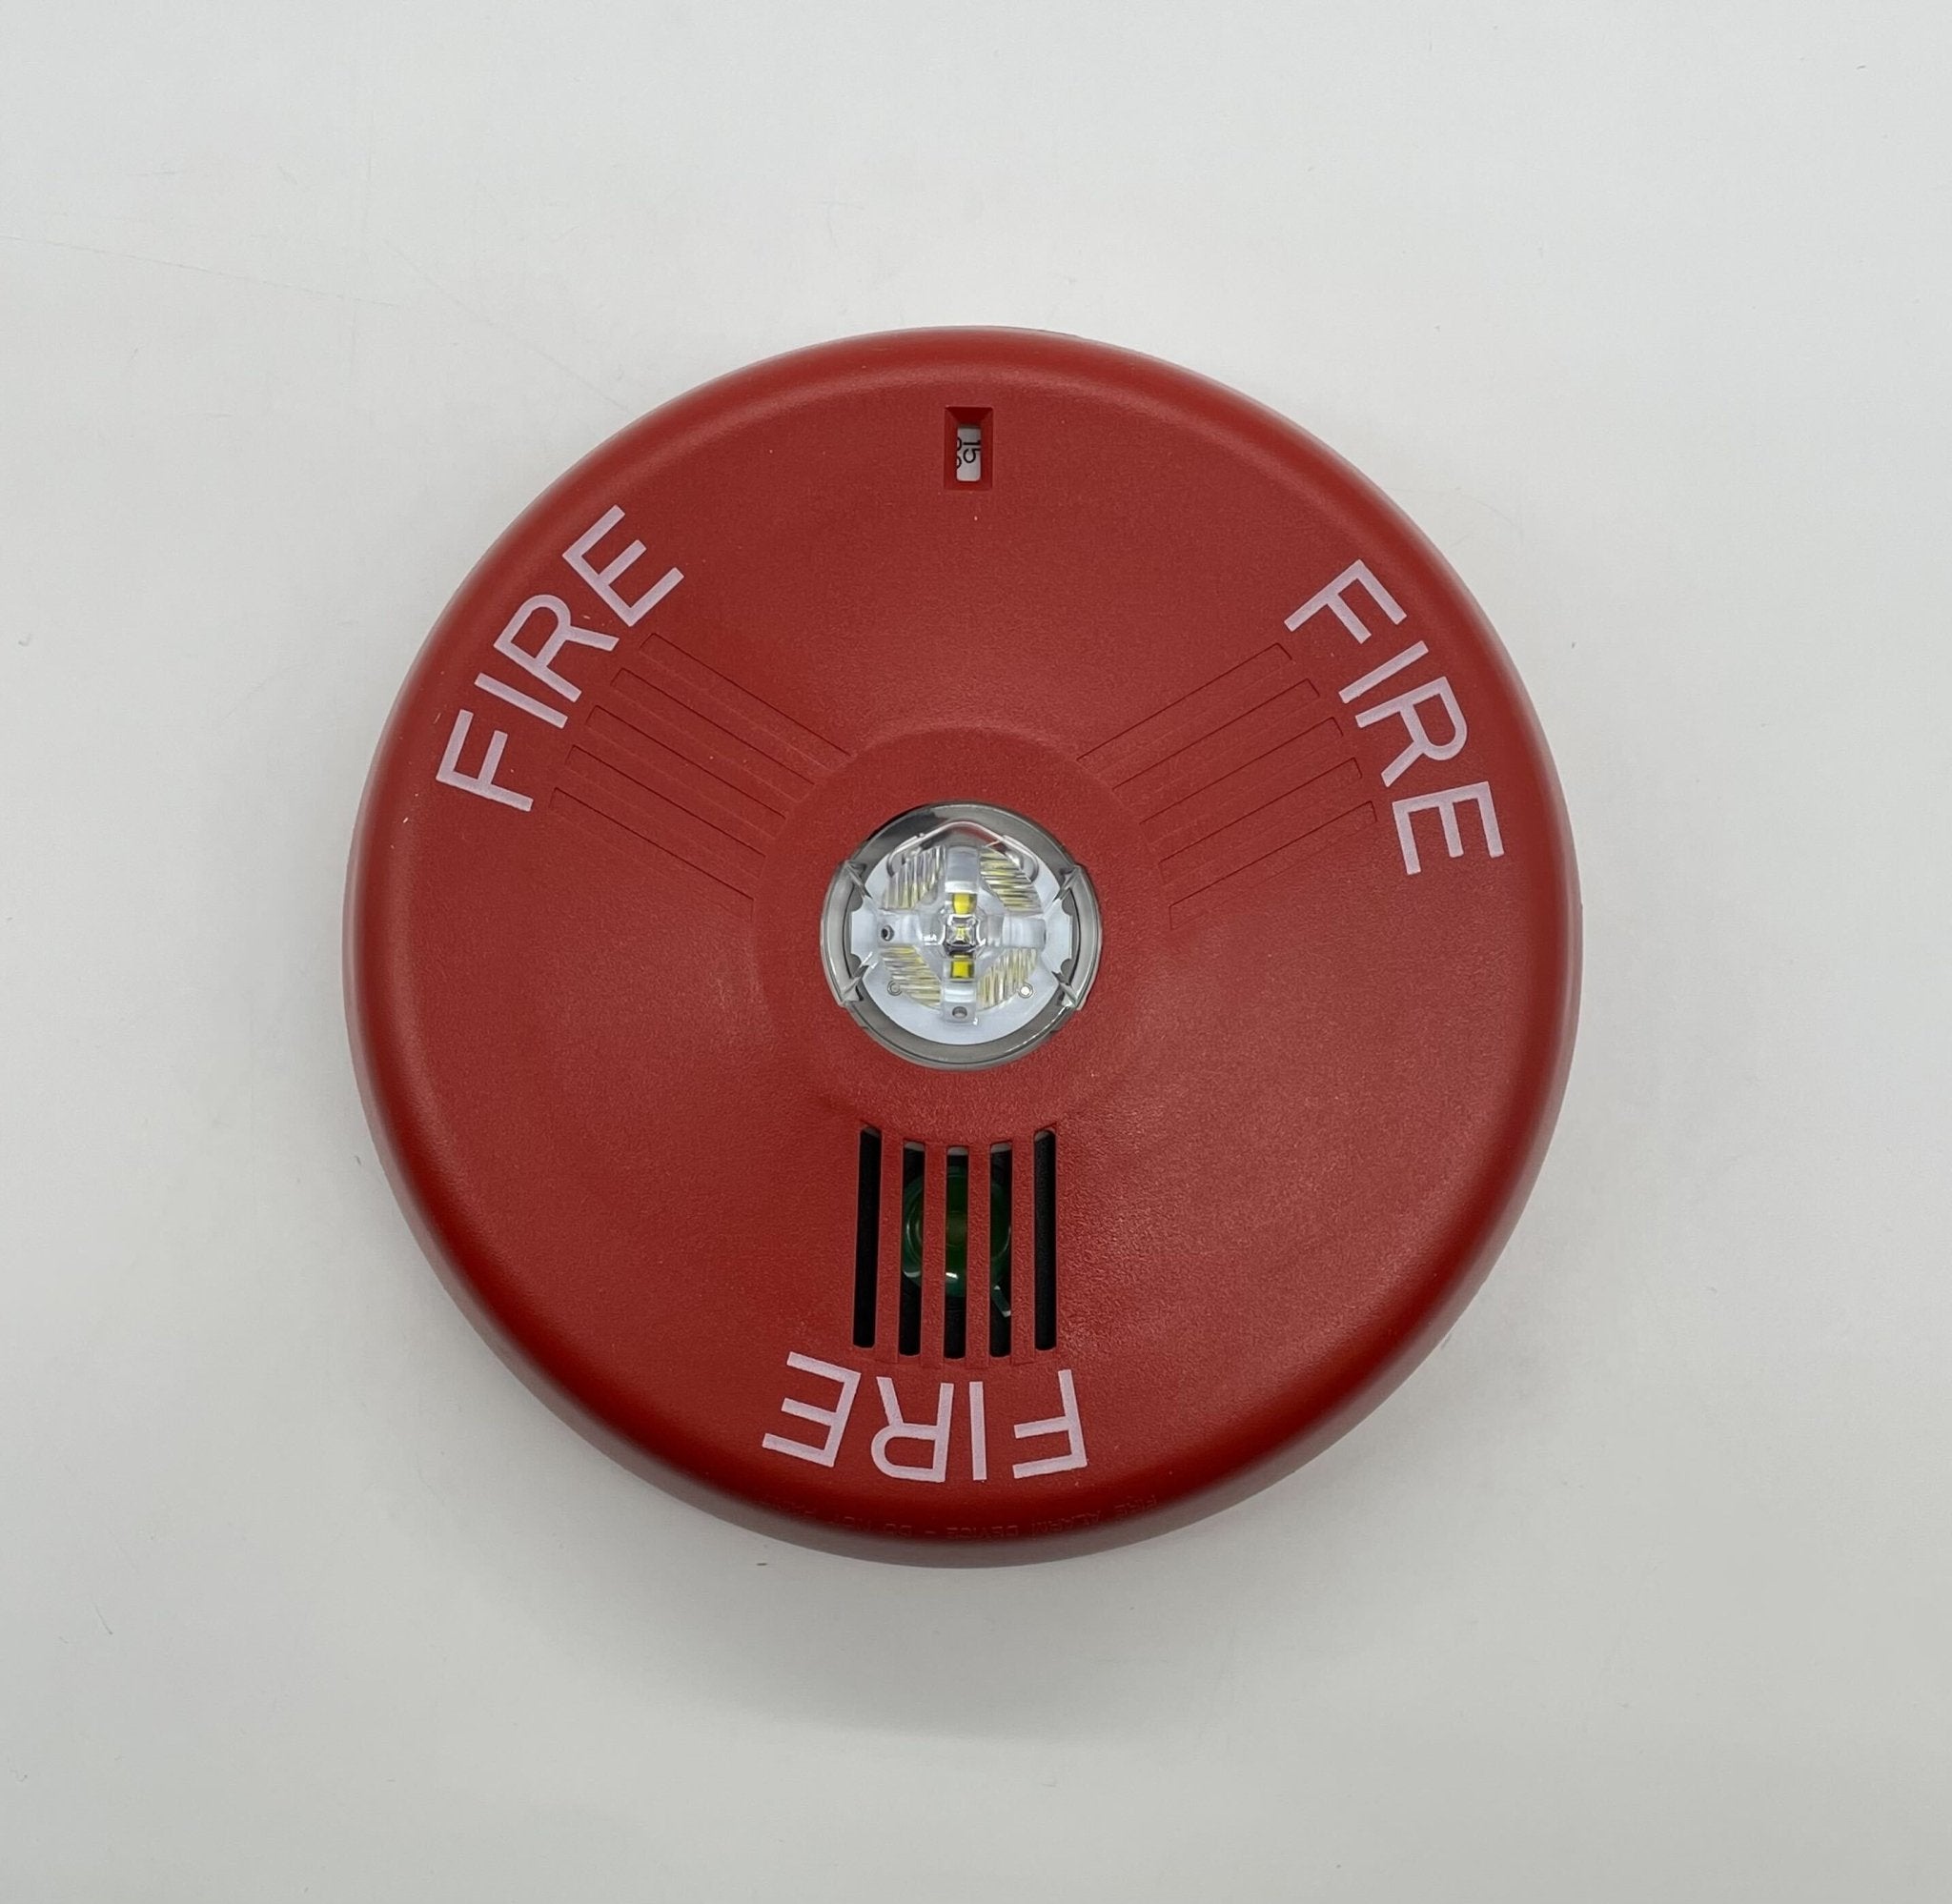 Siemens SLHSCR-F - The Fire Alarm Supplier